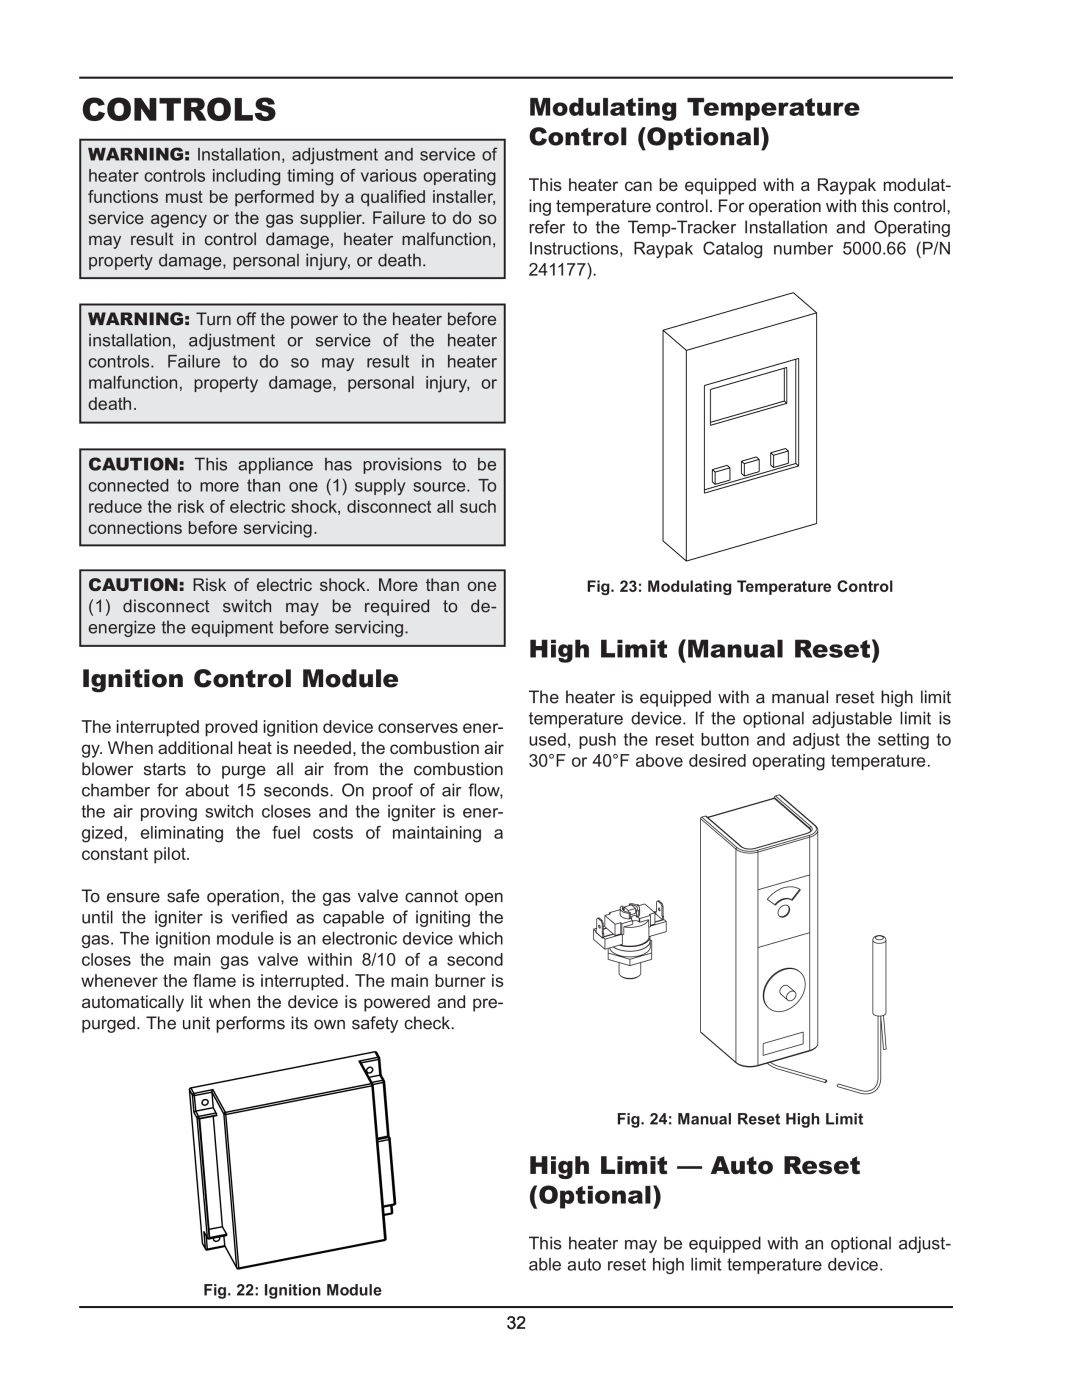 Raypak HD401, HD101 manual Controls, Ignition Control Module, High Limit Manual Reset, High Limit - Auto Reset Optional 